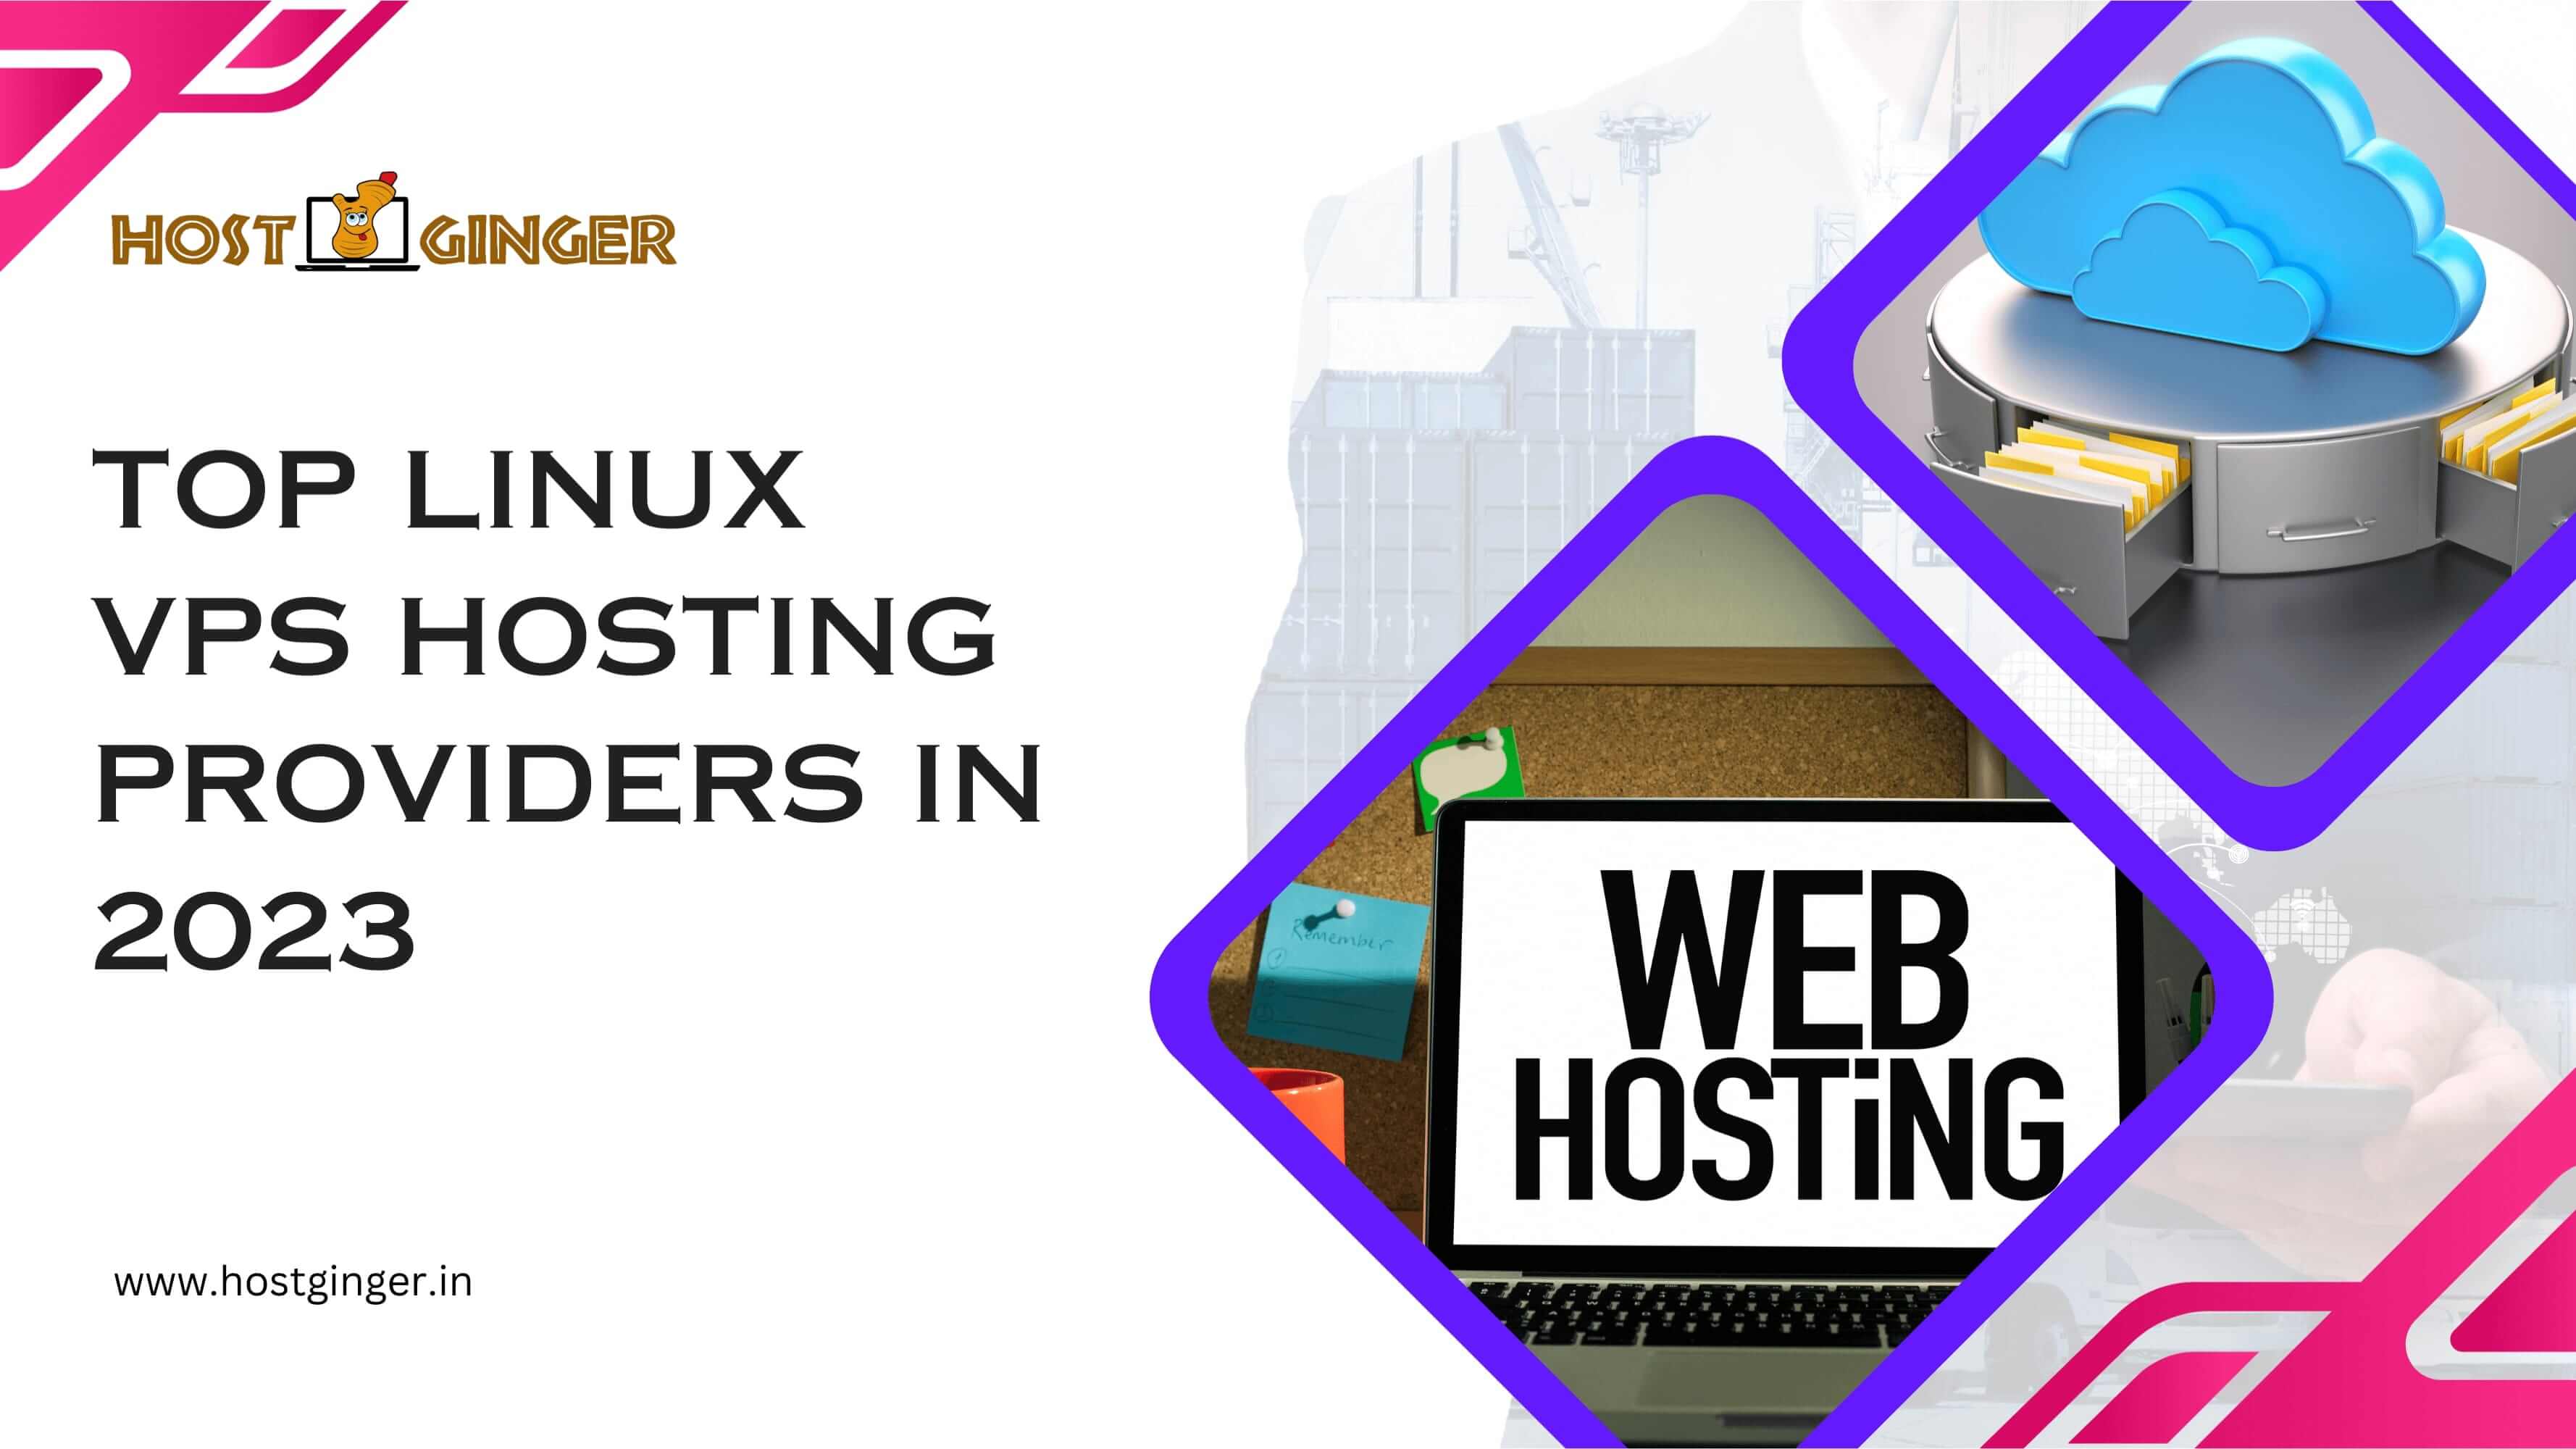 Top Linux VPS Hosting Providers in 2023